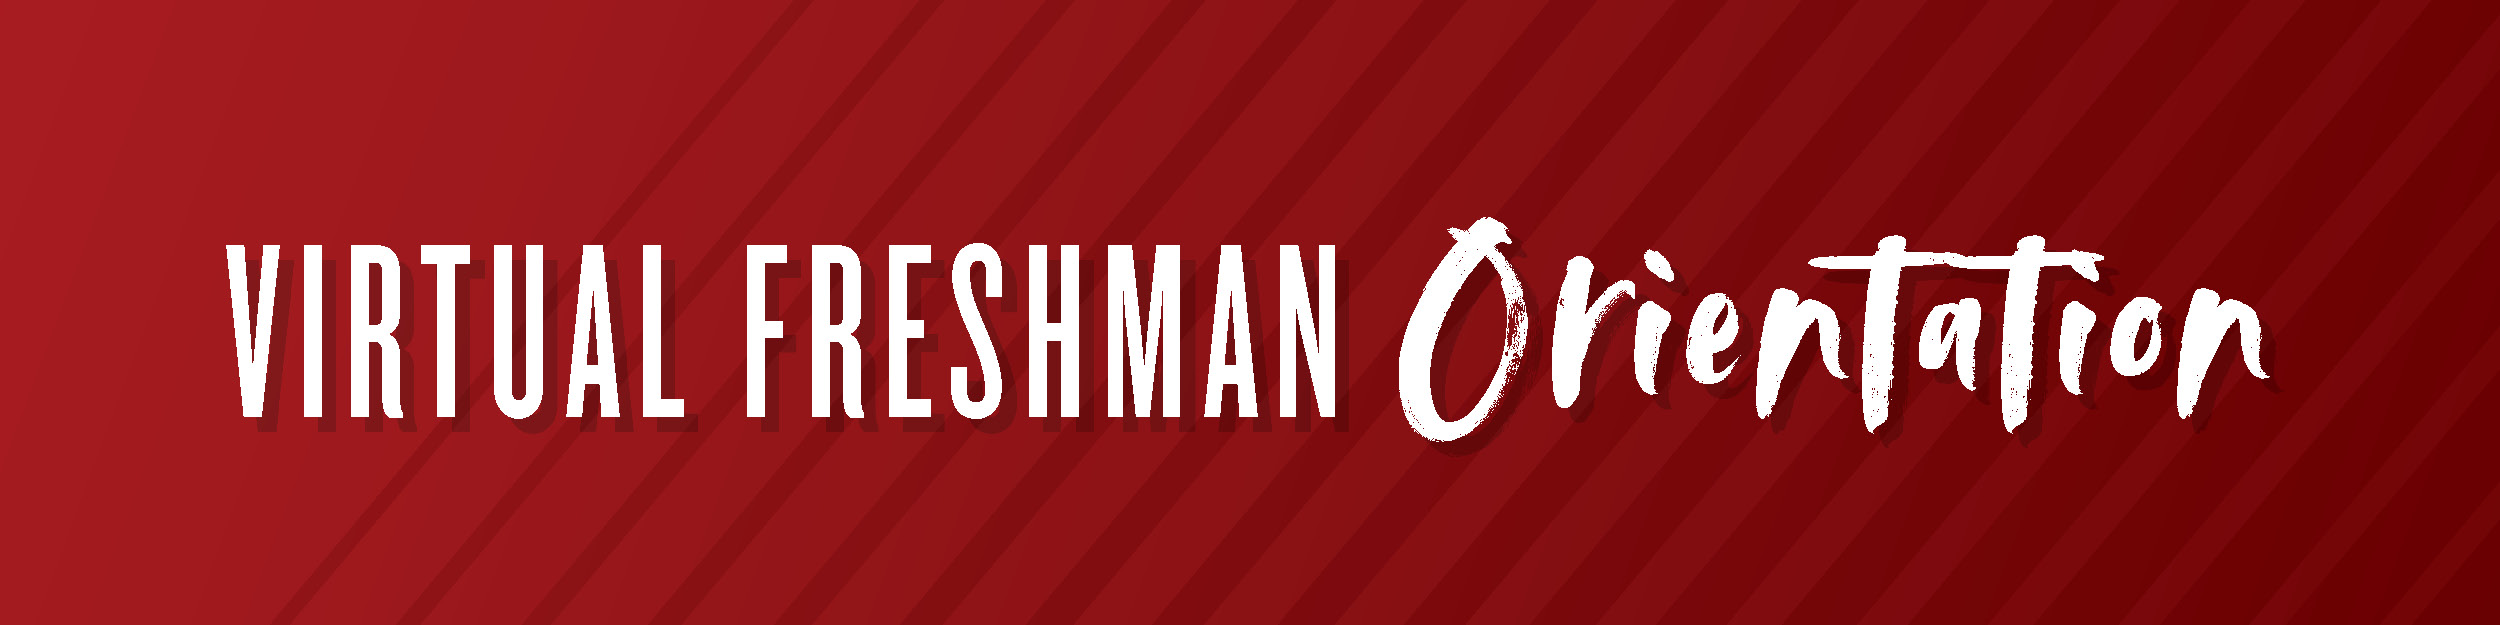 Virtual Freshman Orientation — New Cards